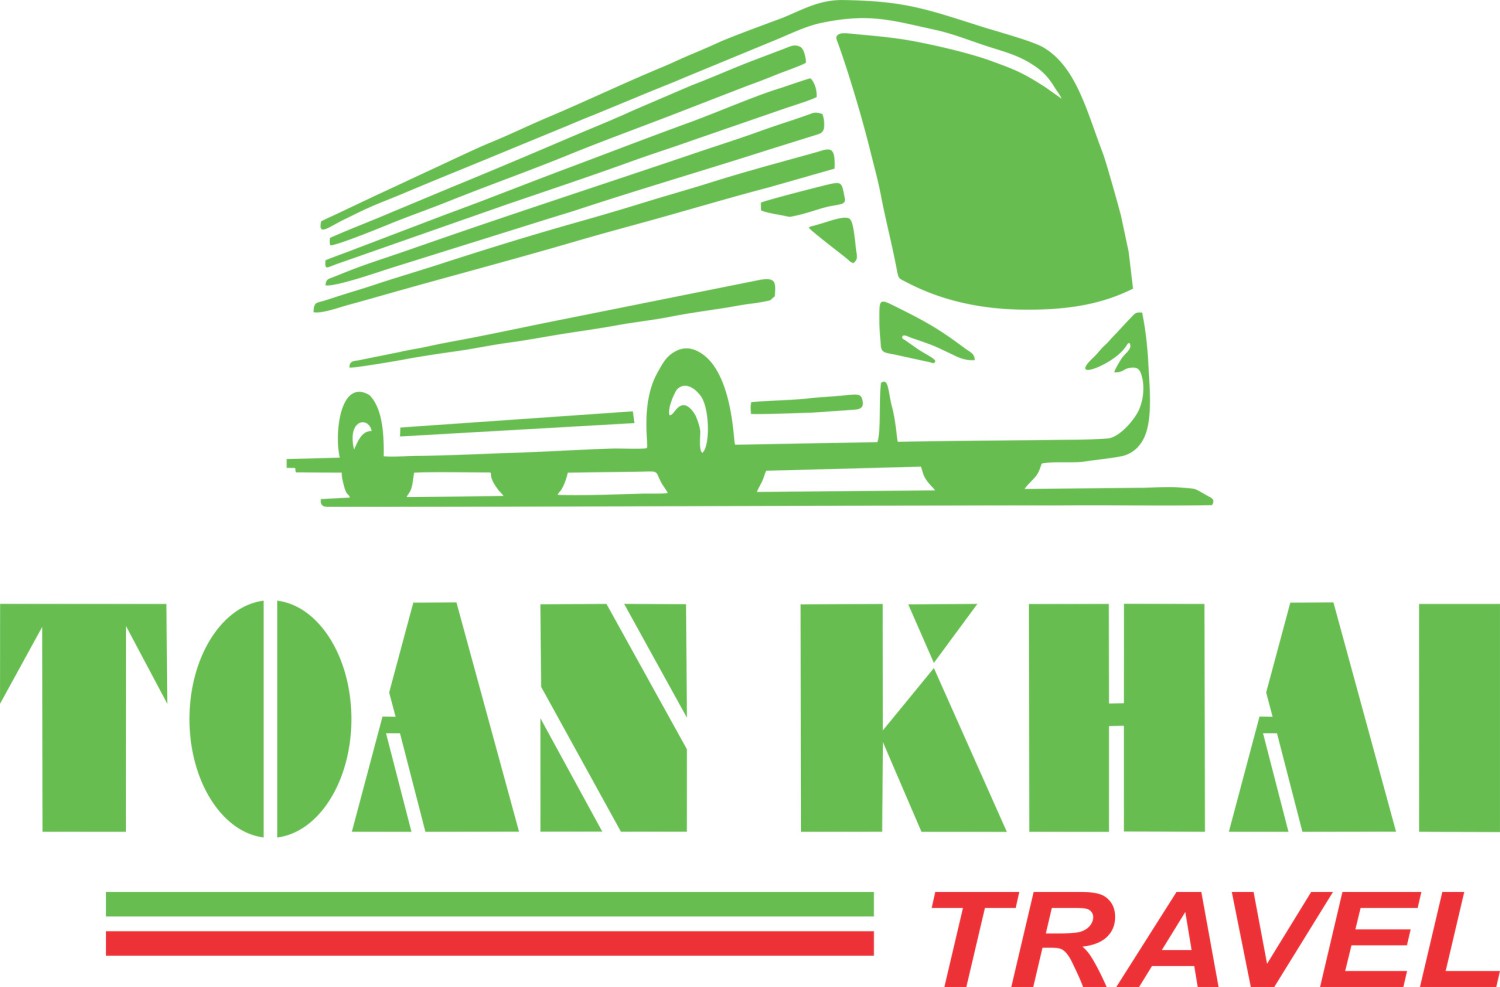 Toan Khai Travel - Limousine Can Tho - Limousine Ho Chi Minh City - Limousine Mui Ne